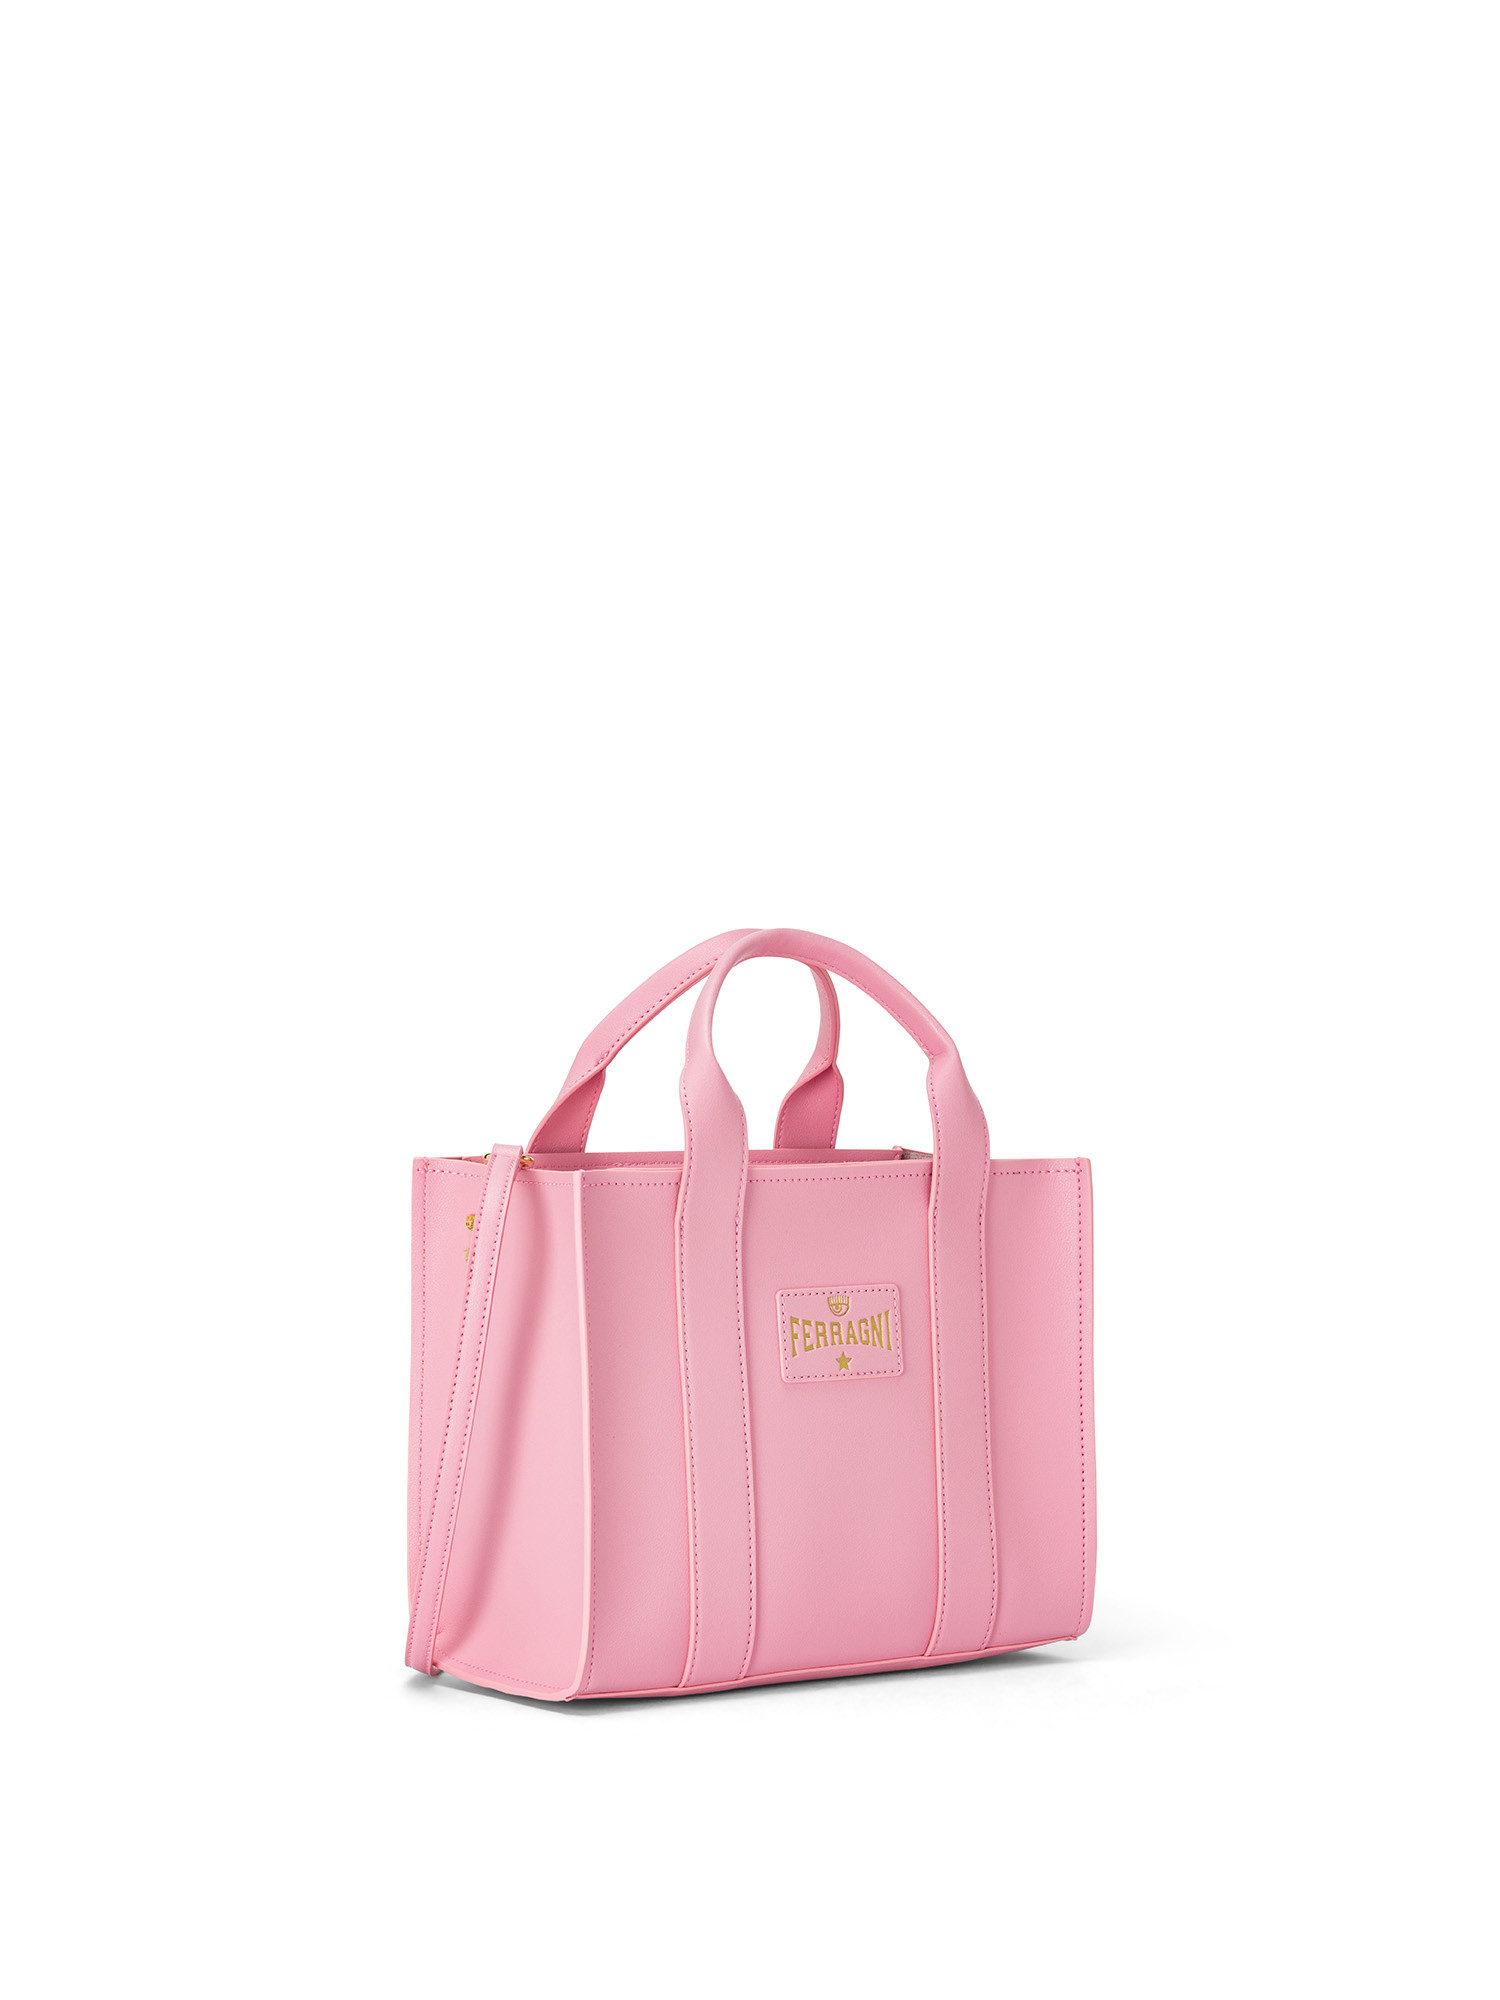 Chiara Ferragni - Range N stretch shopping bag, Light Pink, large image number 1